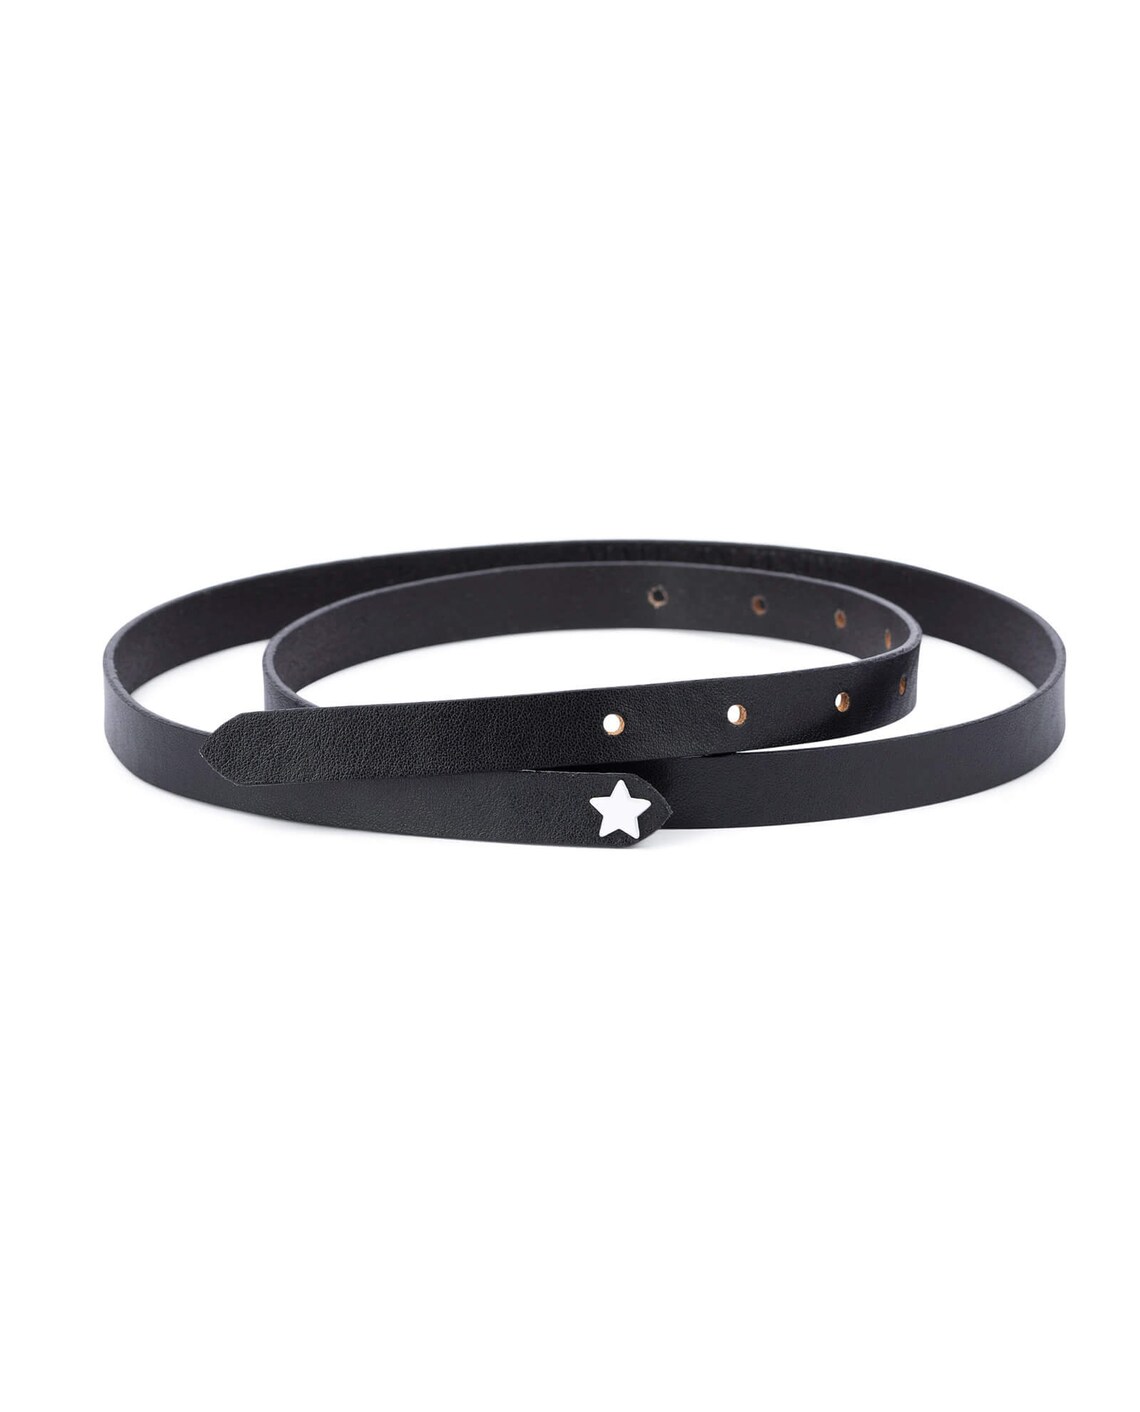 Buy Boys Belts With White Star Buckle | LeatherBeltsOnline